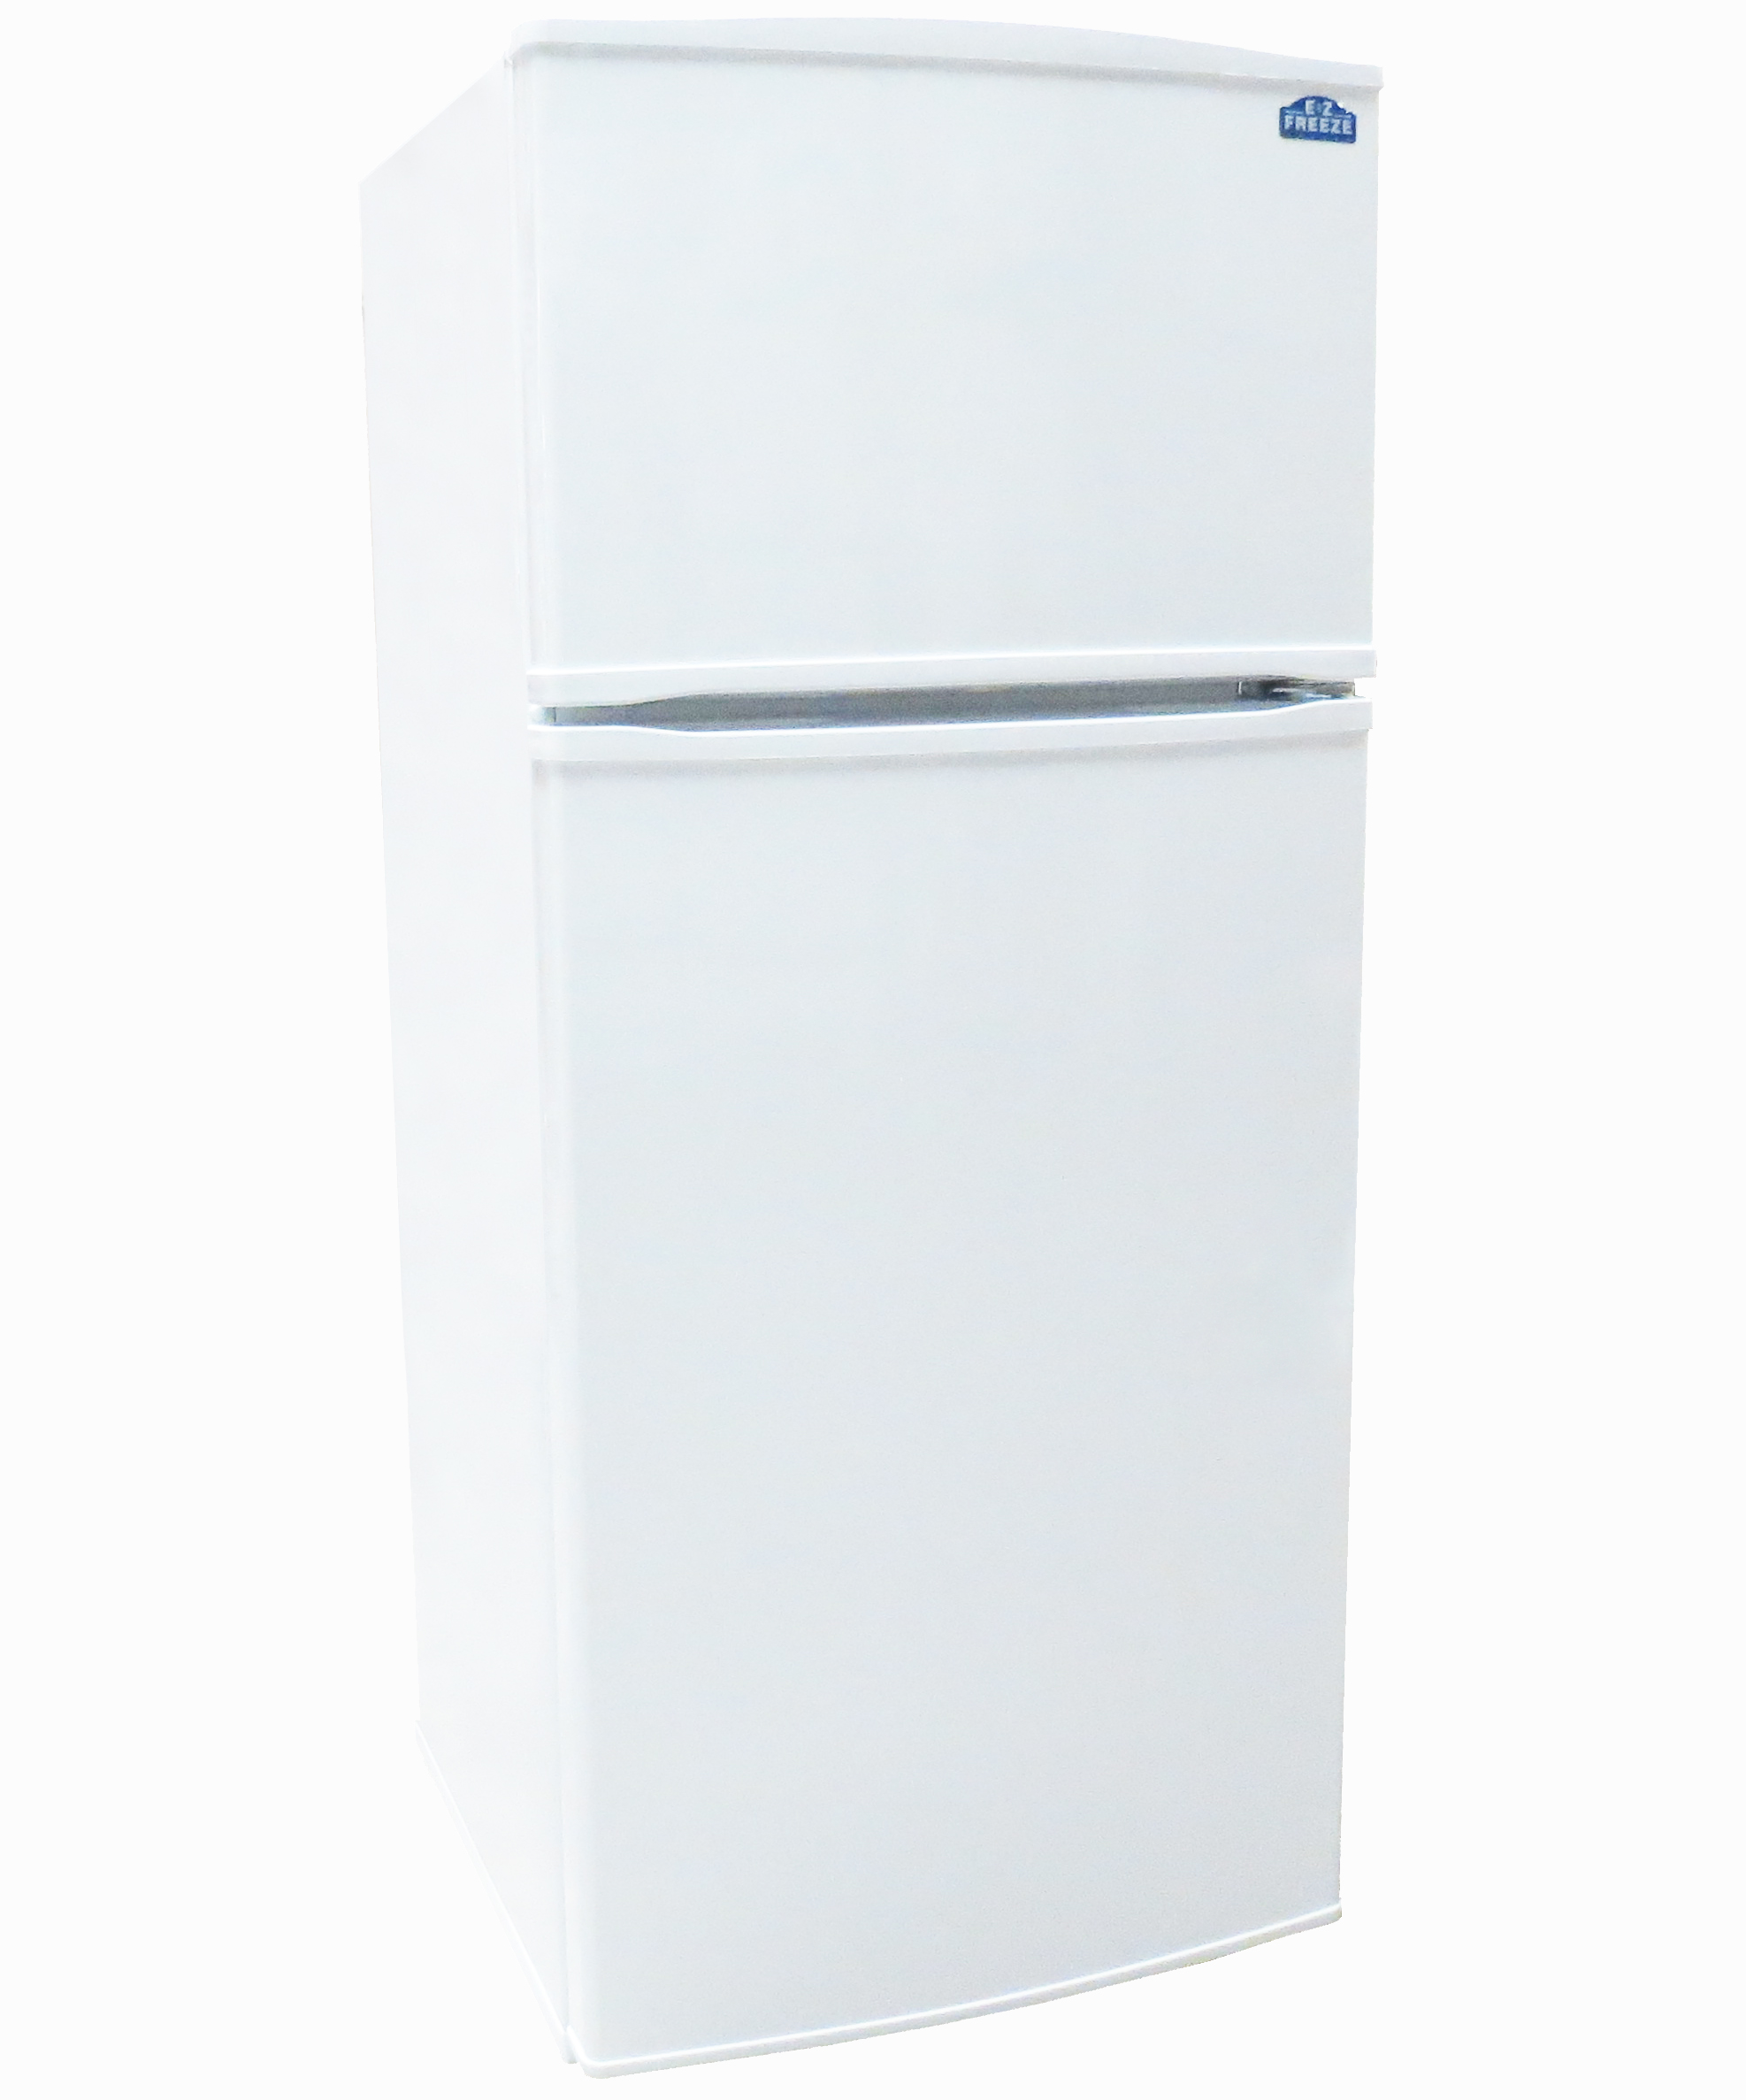 Propane Refrigerators 2021